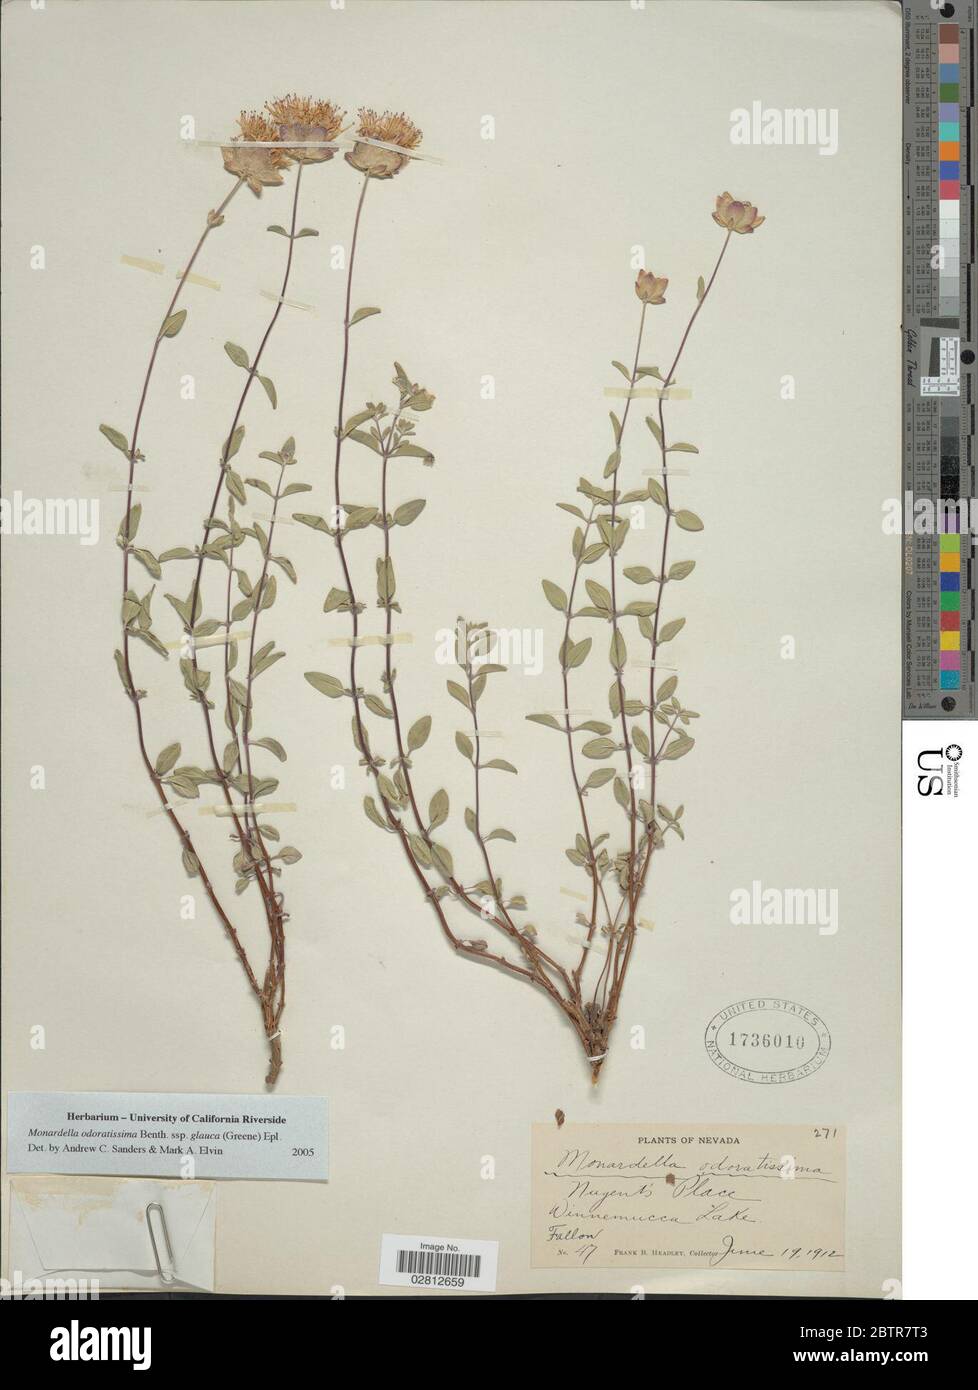 Monardella odoratissima subsp glauca Epling. Stock Photo